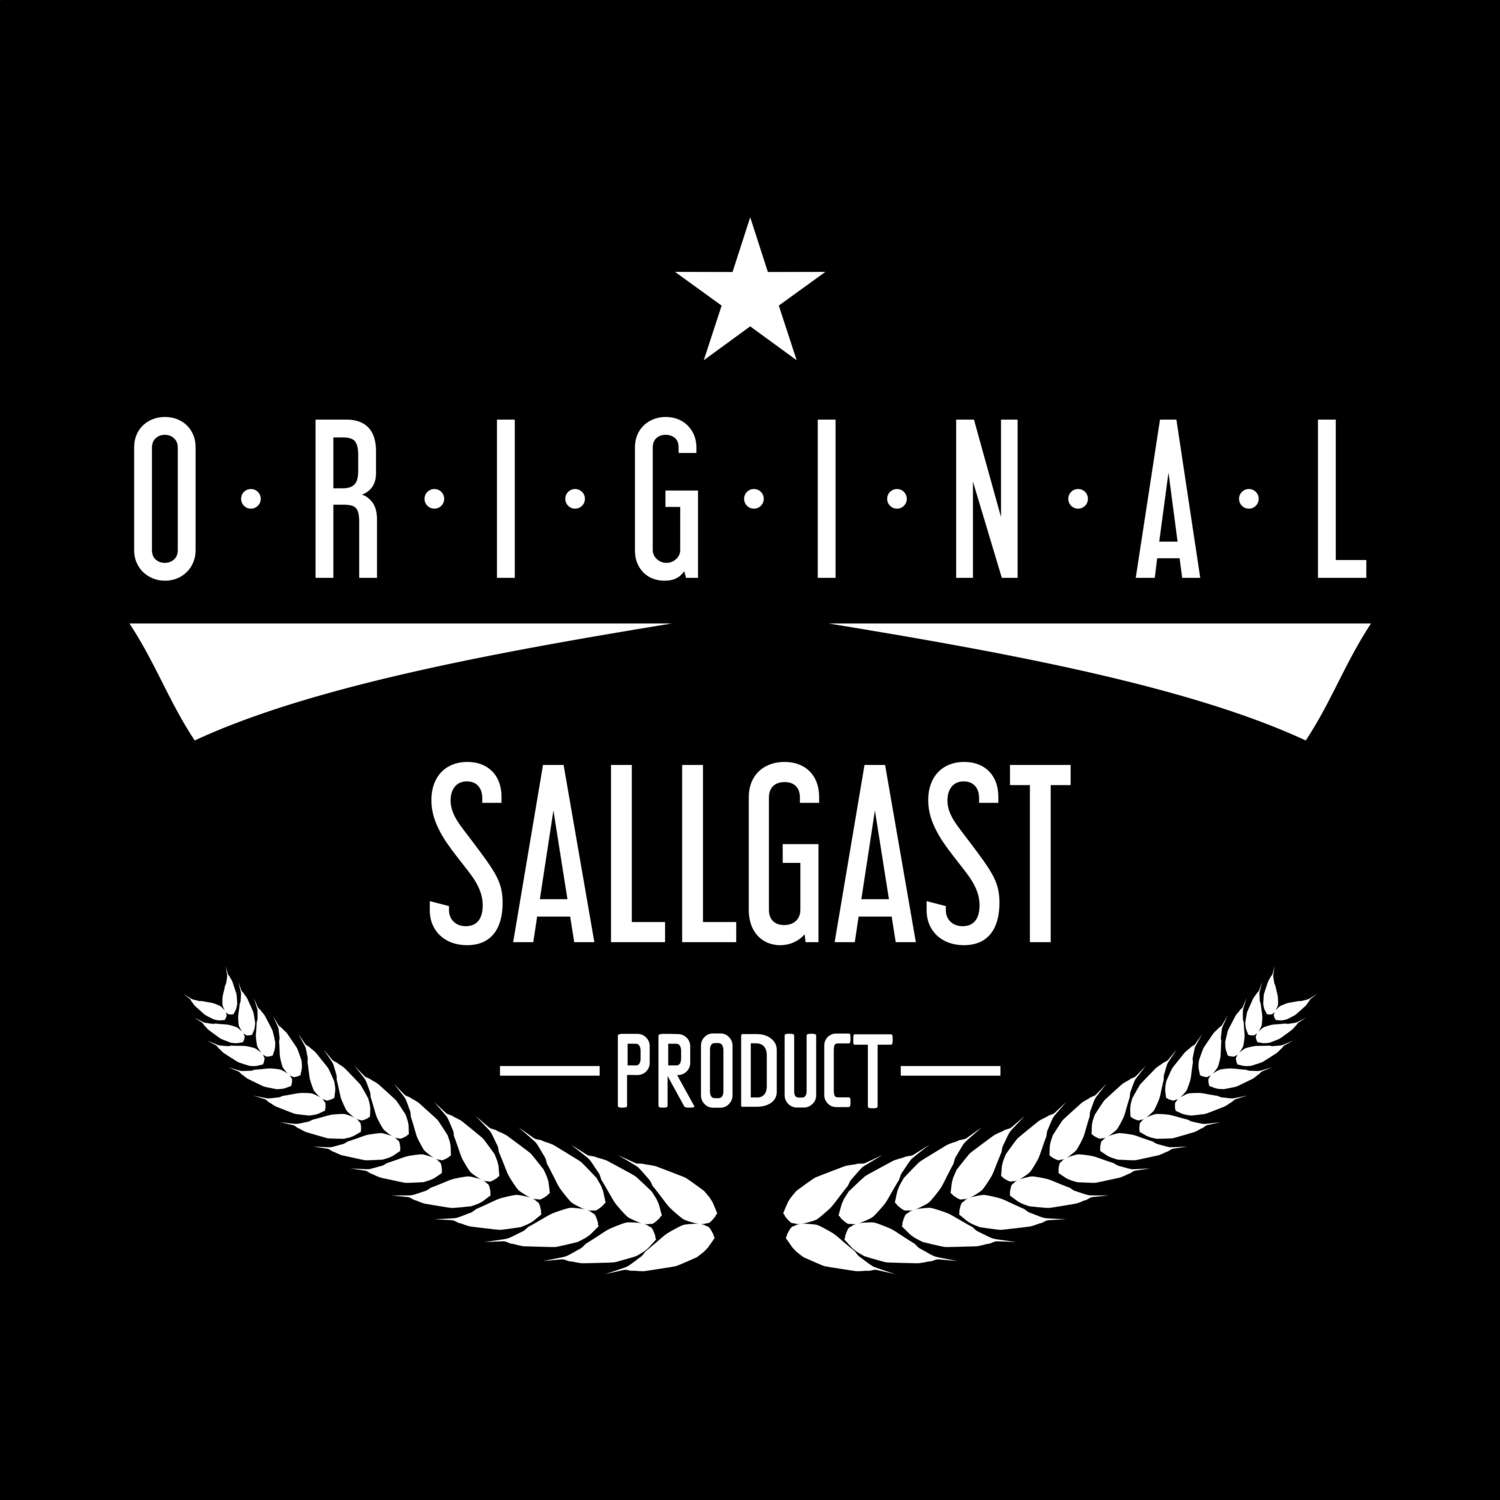 Sallgast T-Shirt »Original Product«